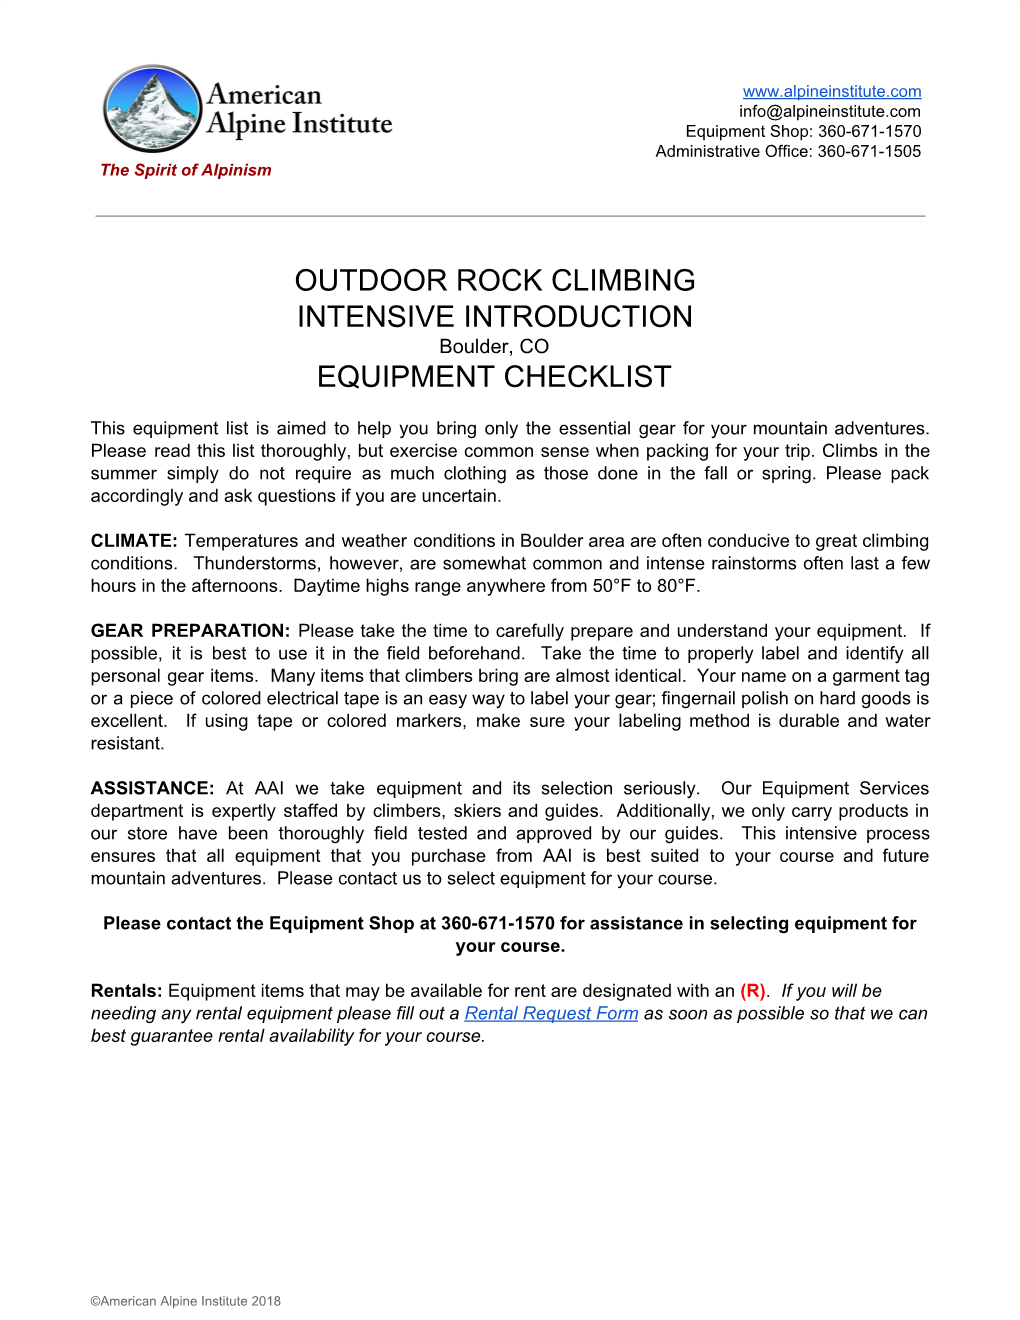 OUTDOOR ROCK CLIMBING INTENSIVE INTRODUCTION Boulder, CO EQUIPMENT CHECKLIST